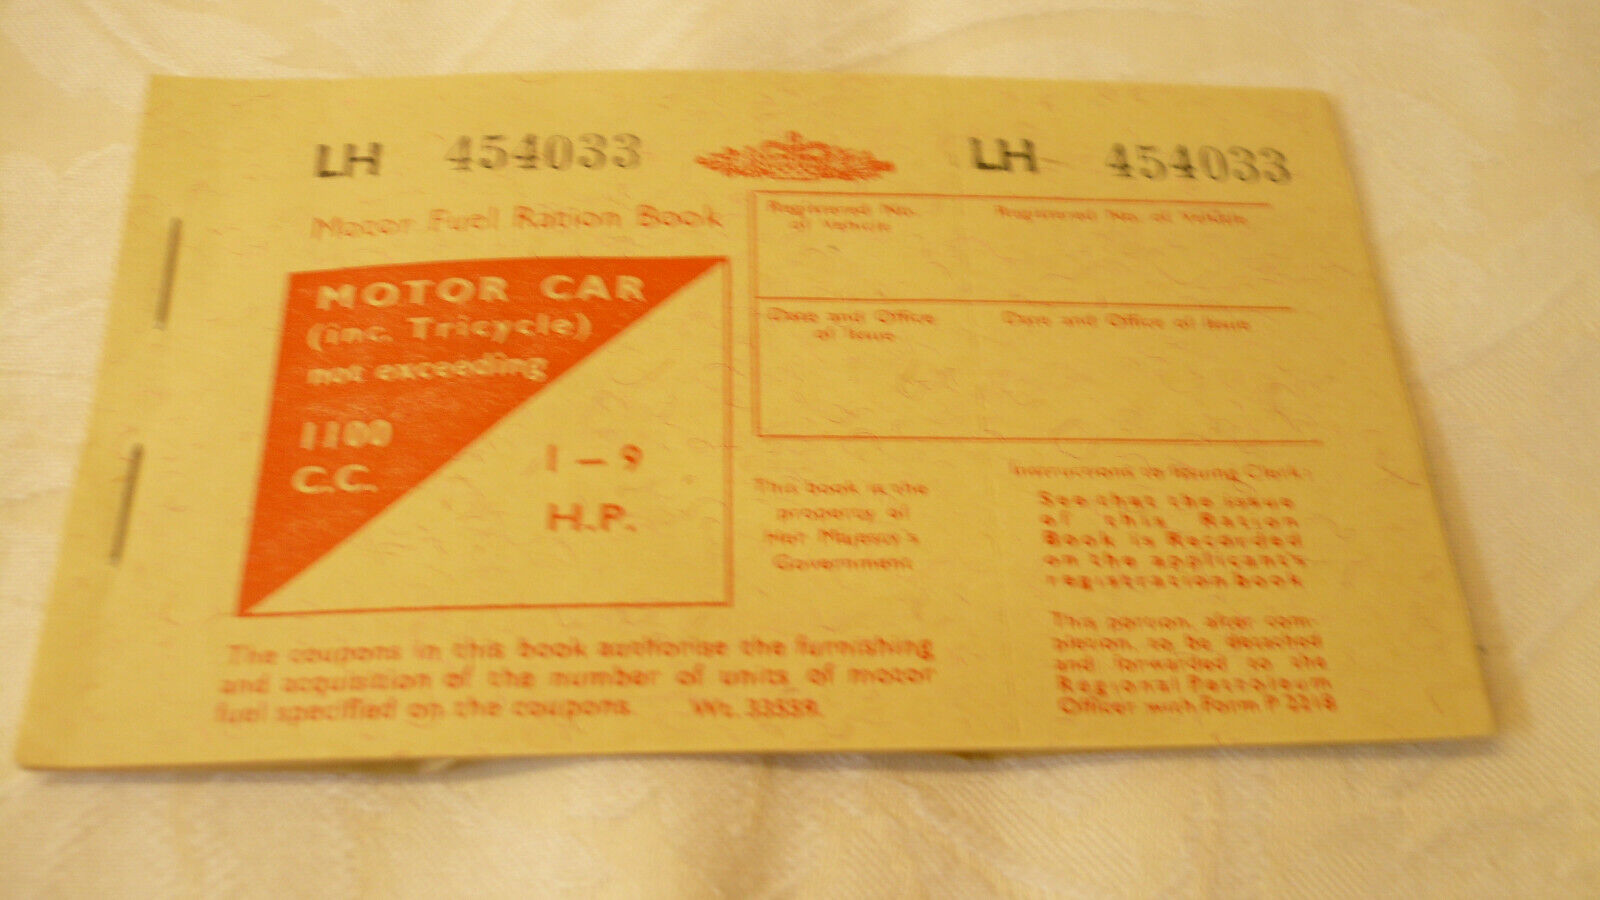 Vintage Motor Fuel Ration Book unused - Car inc Tricycle not exceeding 1100cc 